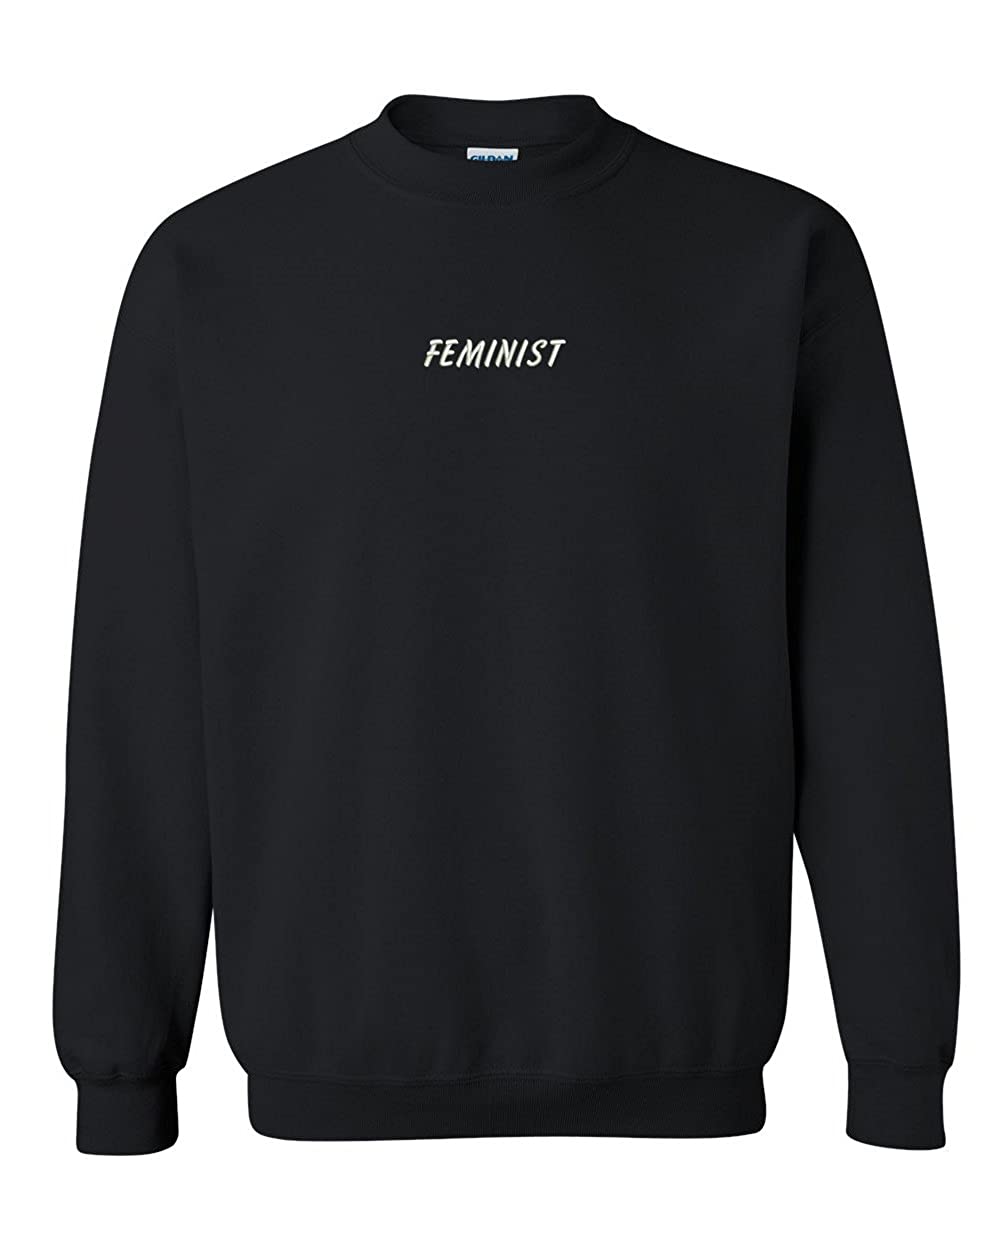 Trendy Apparel Shop Feminist Embroidered Crewneck Sweatshirt